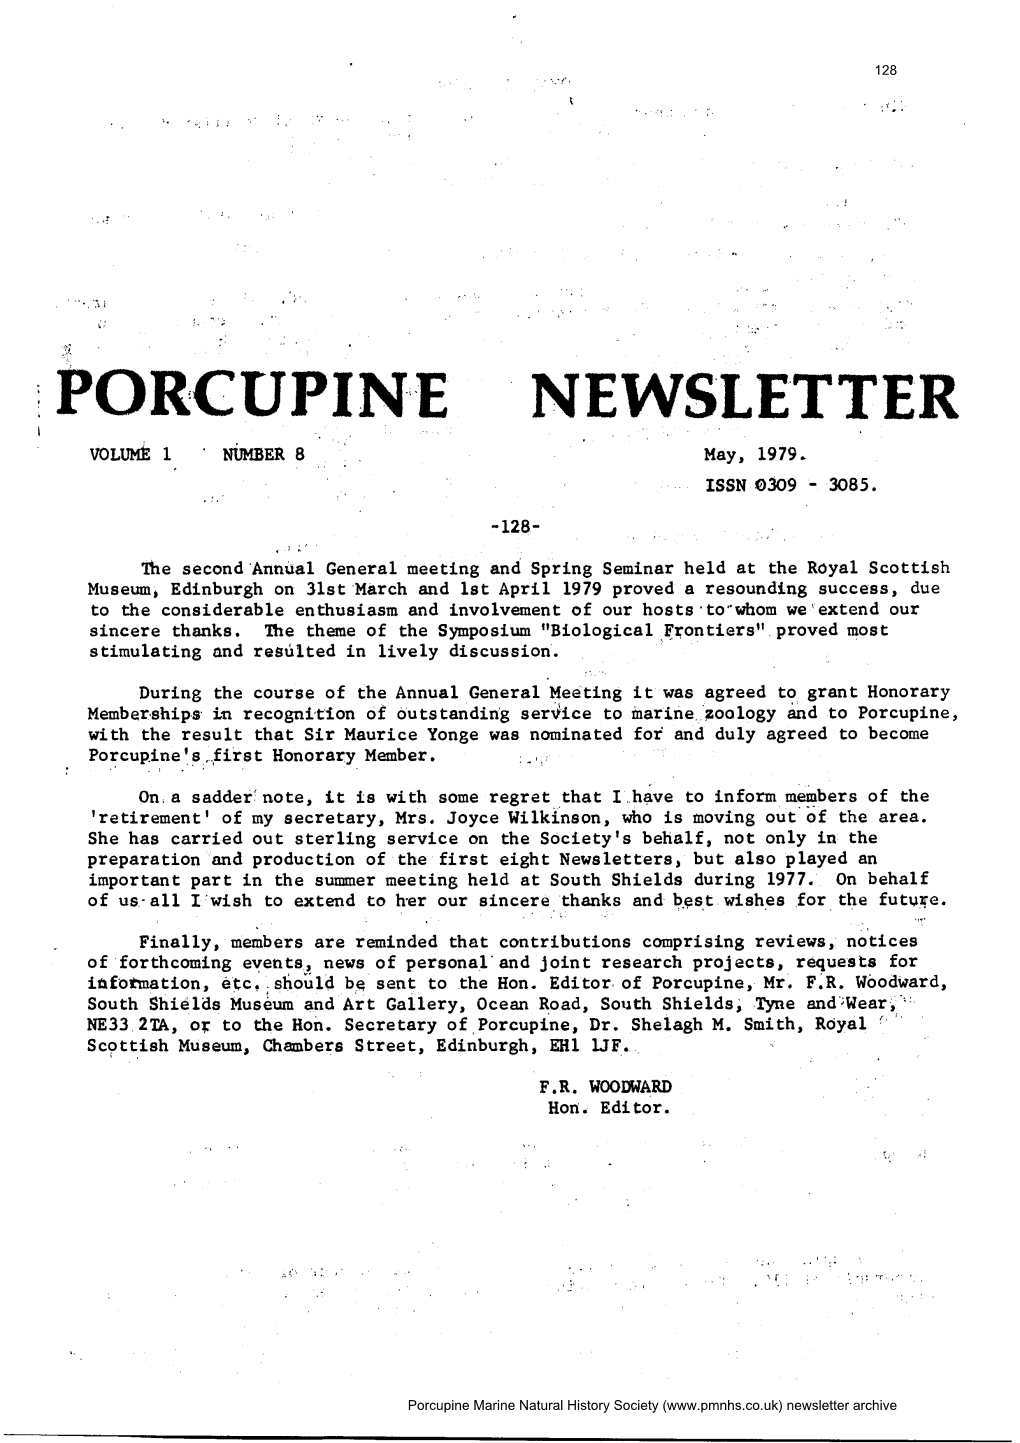 Porcupine Newsletter Volume 1, Number 8, May 1979